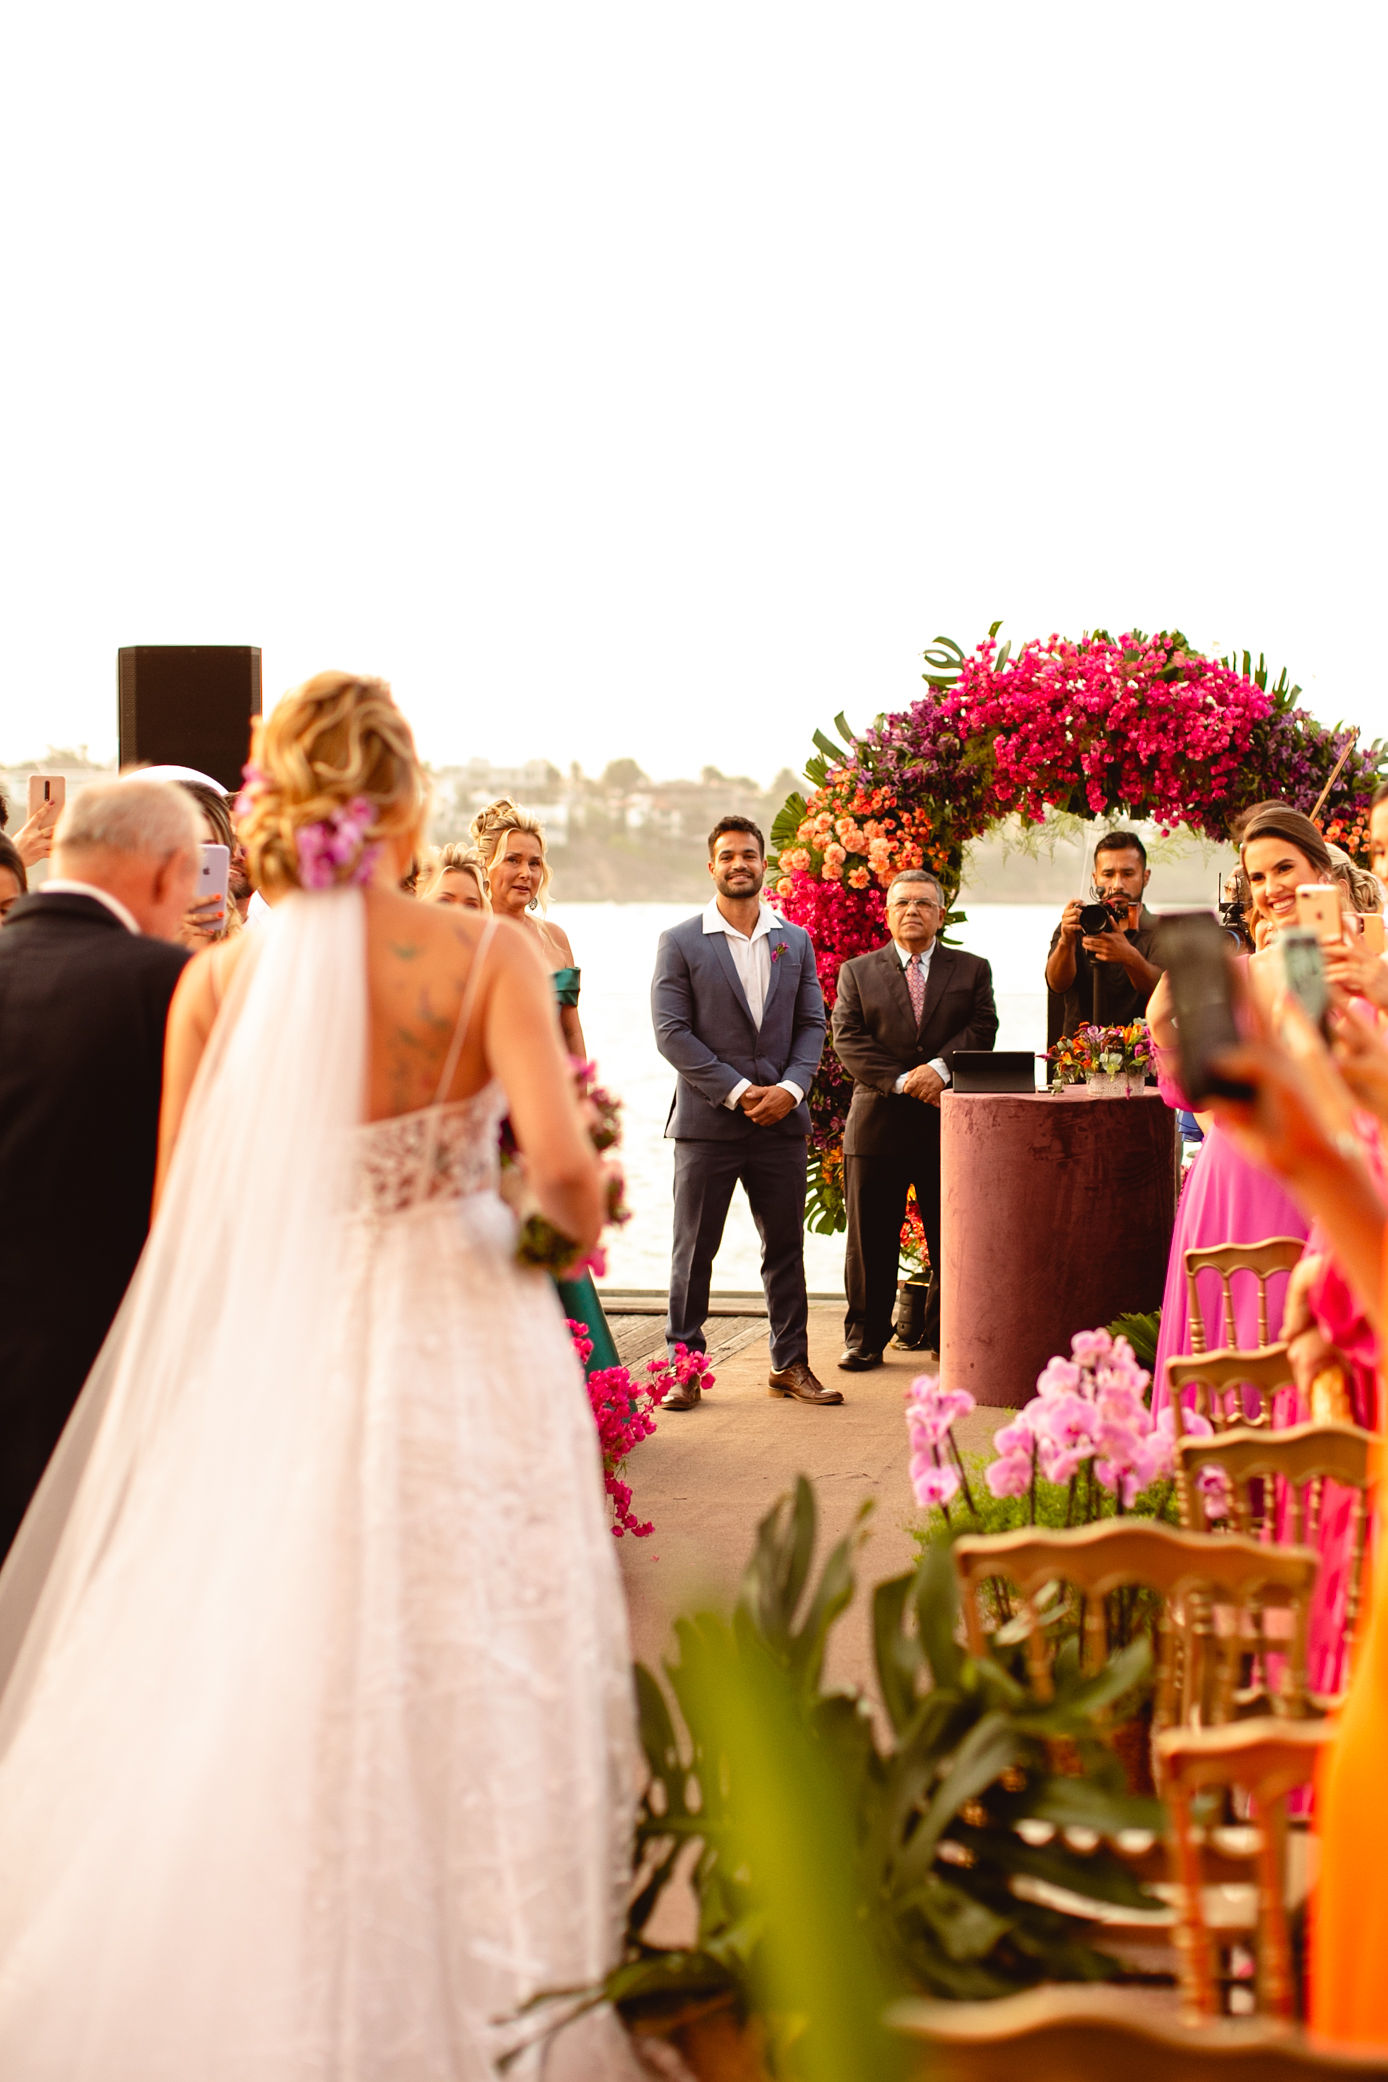 Casamento colorido com vista para o mar num final de tarde encantador no Espírito Santo &#8211; Thiellen &#038; Henrique